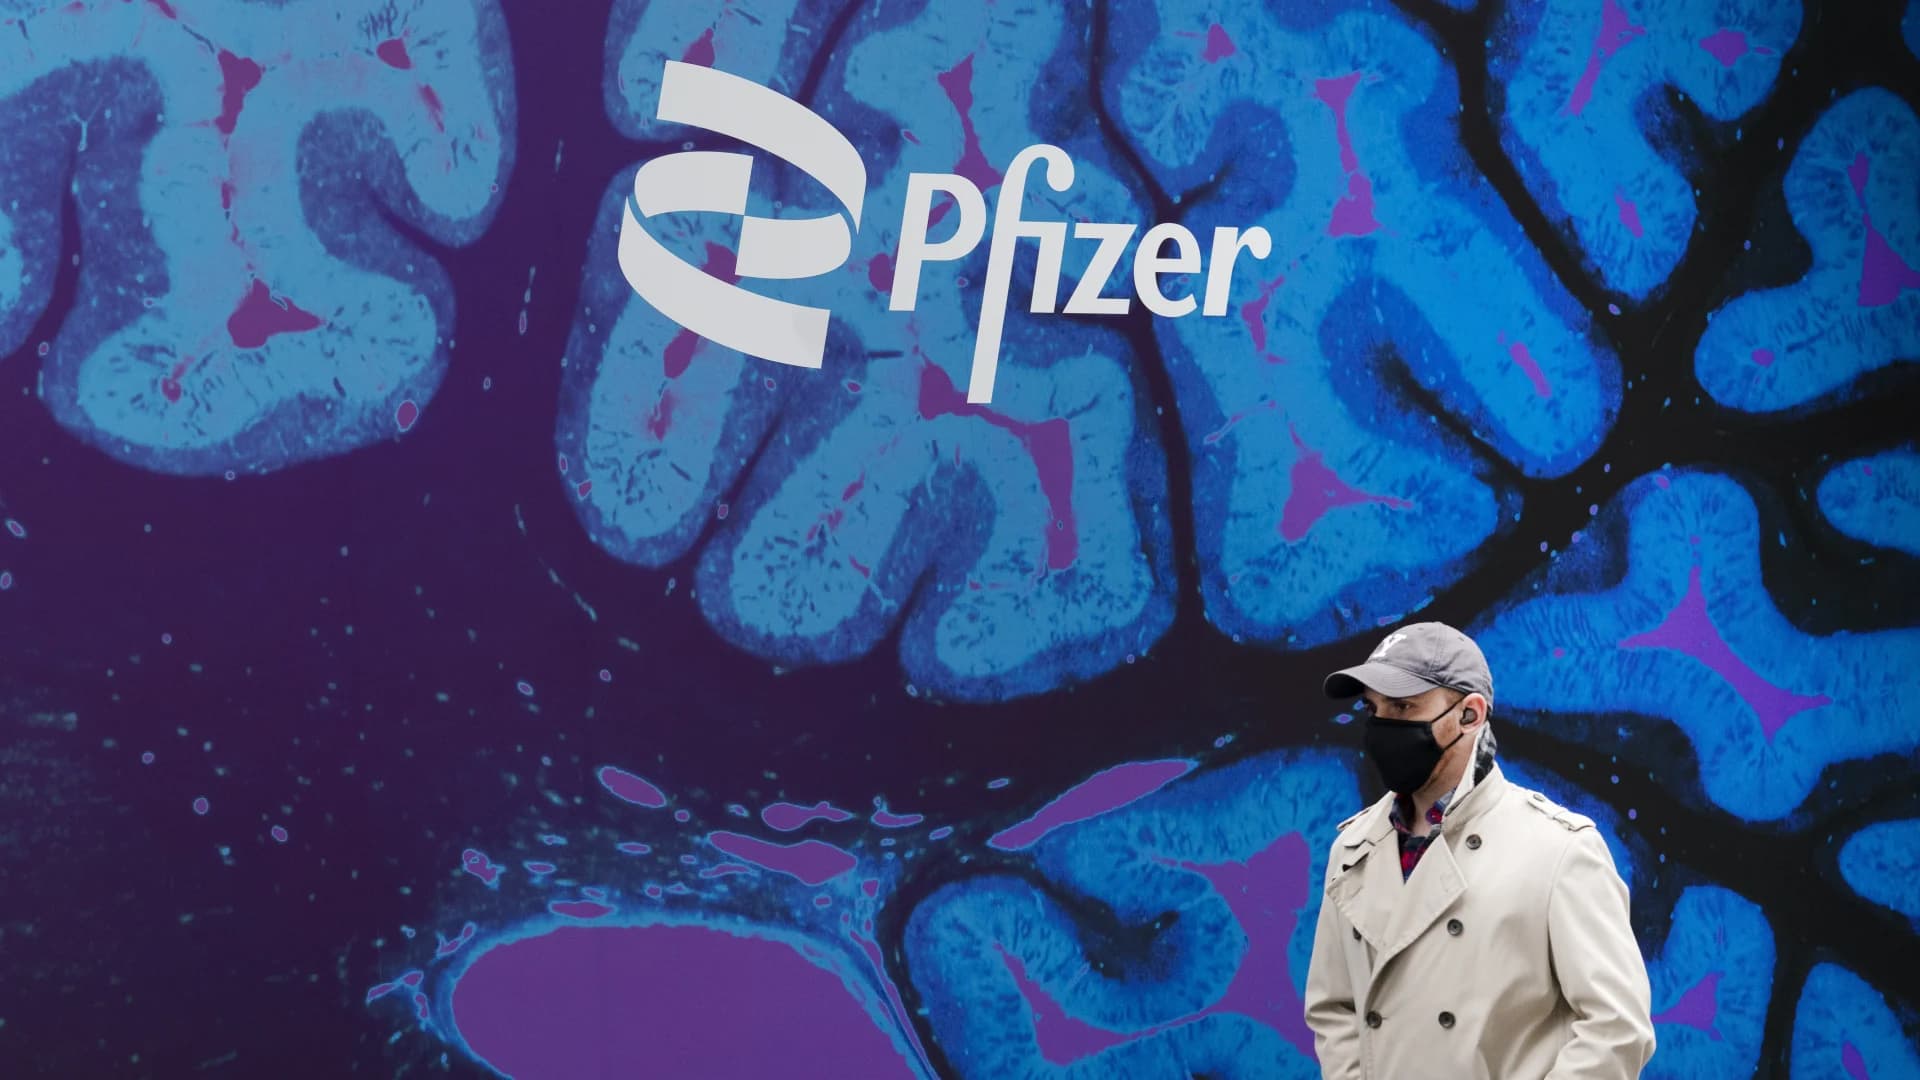 Pfizer to spend $11.6B on migraine treatment maker Biohaven